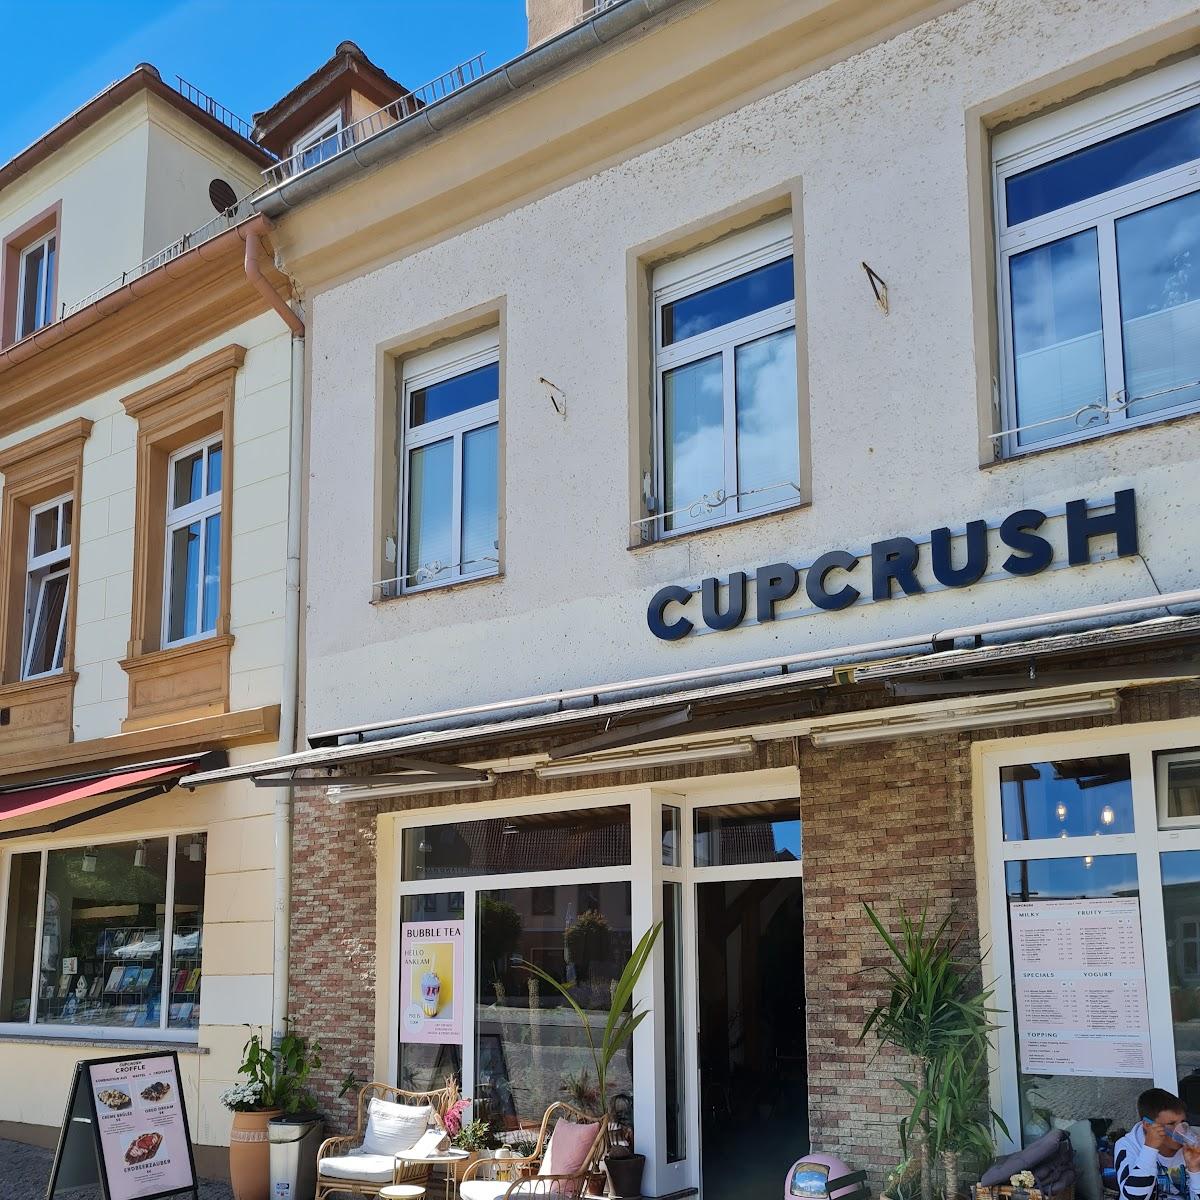 Restaurant "Cupcrush Tea Bar" in Anklam